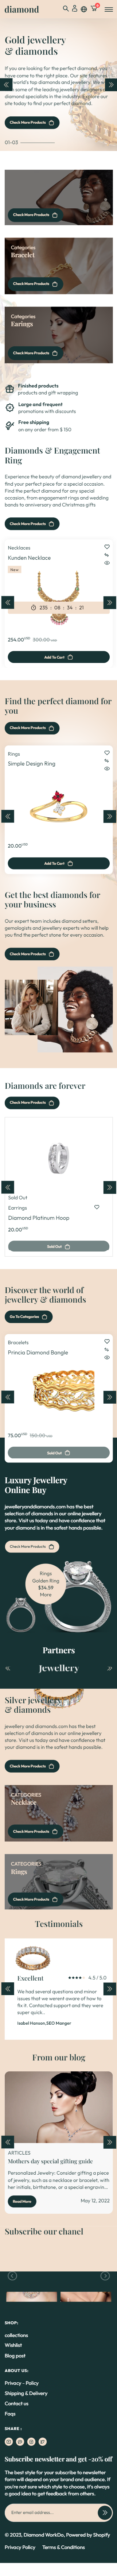 Diamond WordPress Theme - WorkDo